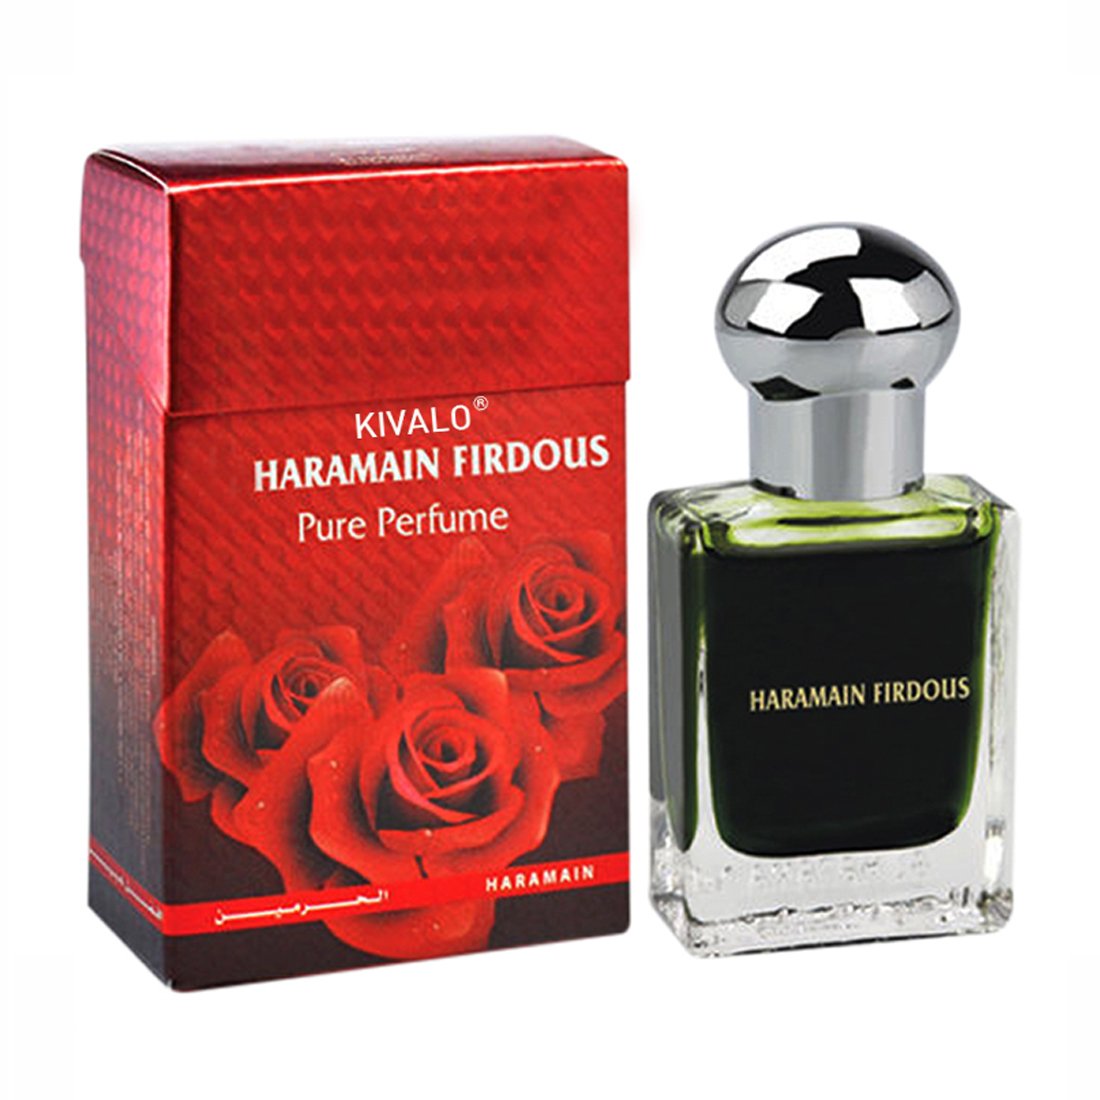 Al Haramain Oudi & Firdous Fragrance Pure Original Roll on Perfume Oil Pack of 2 (Attar) - 2 x 15 ml